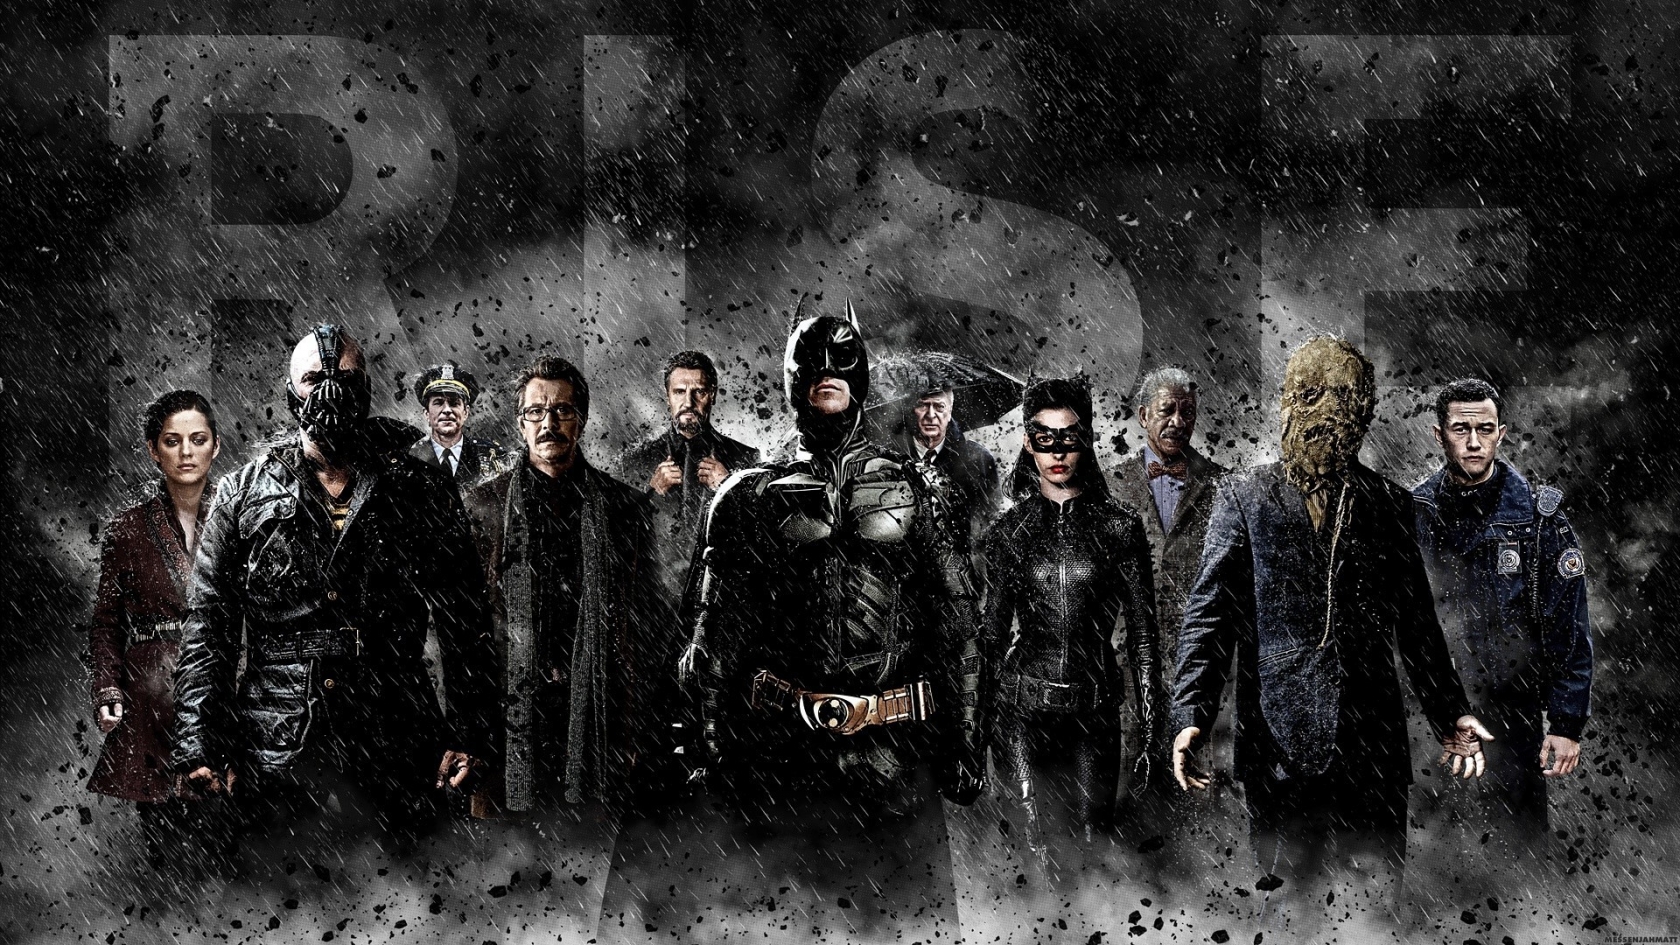 The Dark Knight Rises Cast for 1680 x 945 HDTV resolution